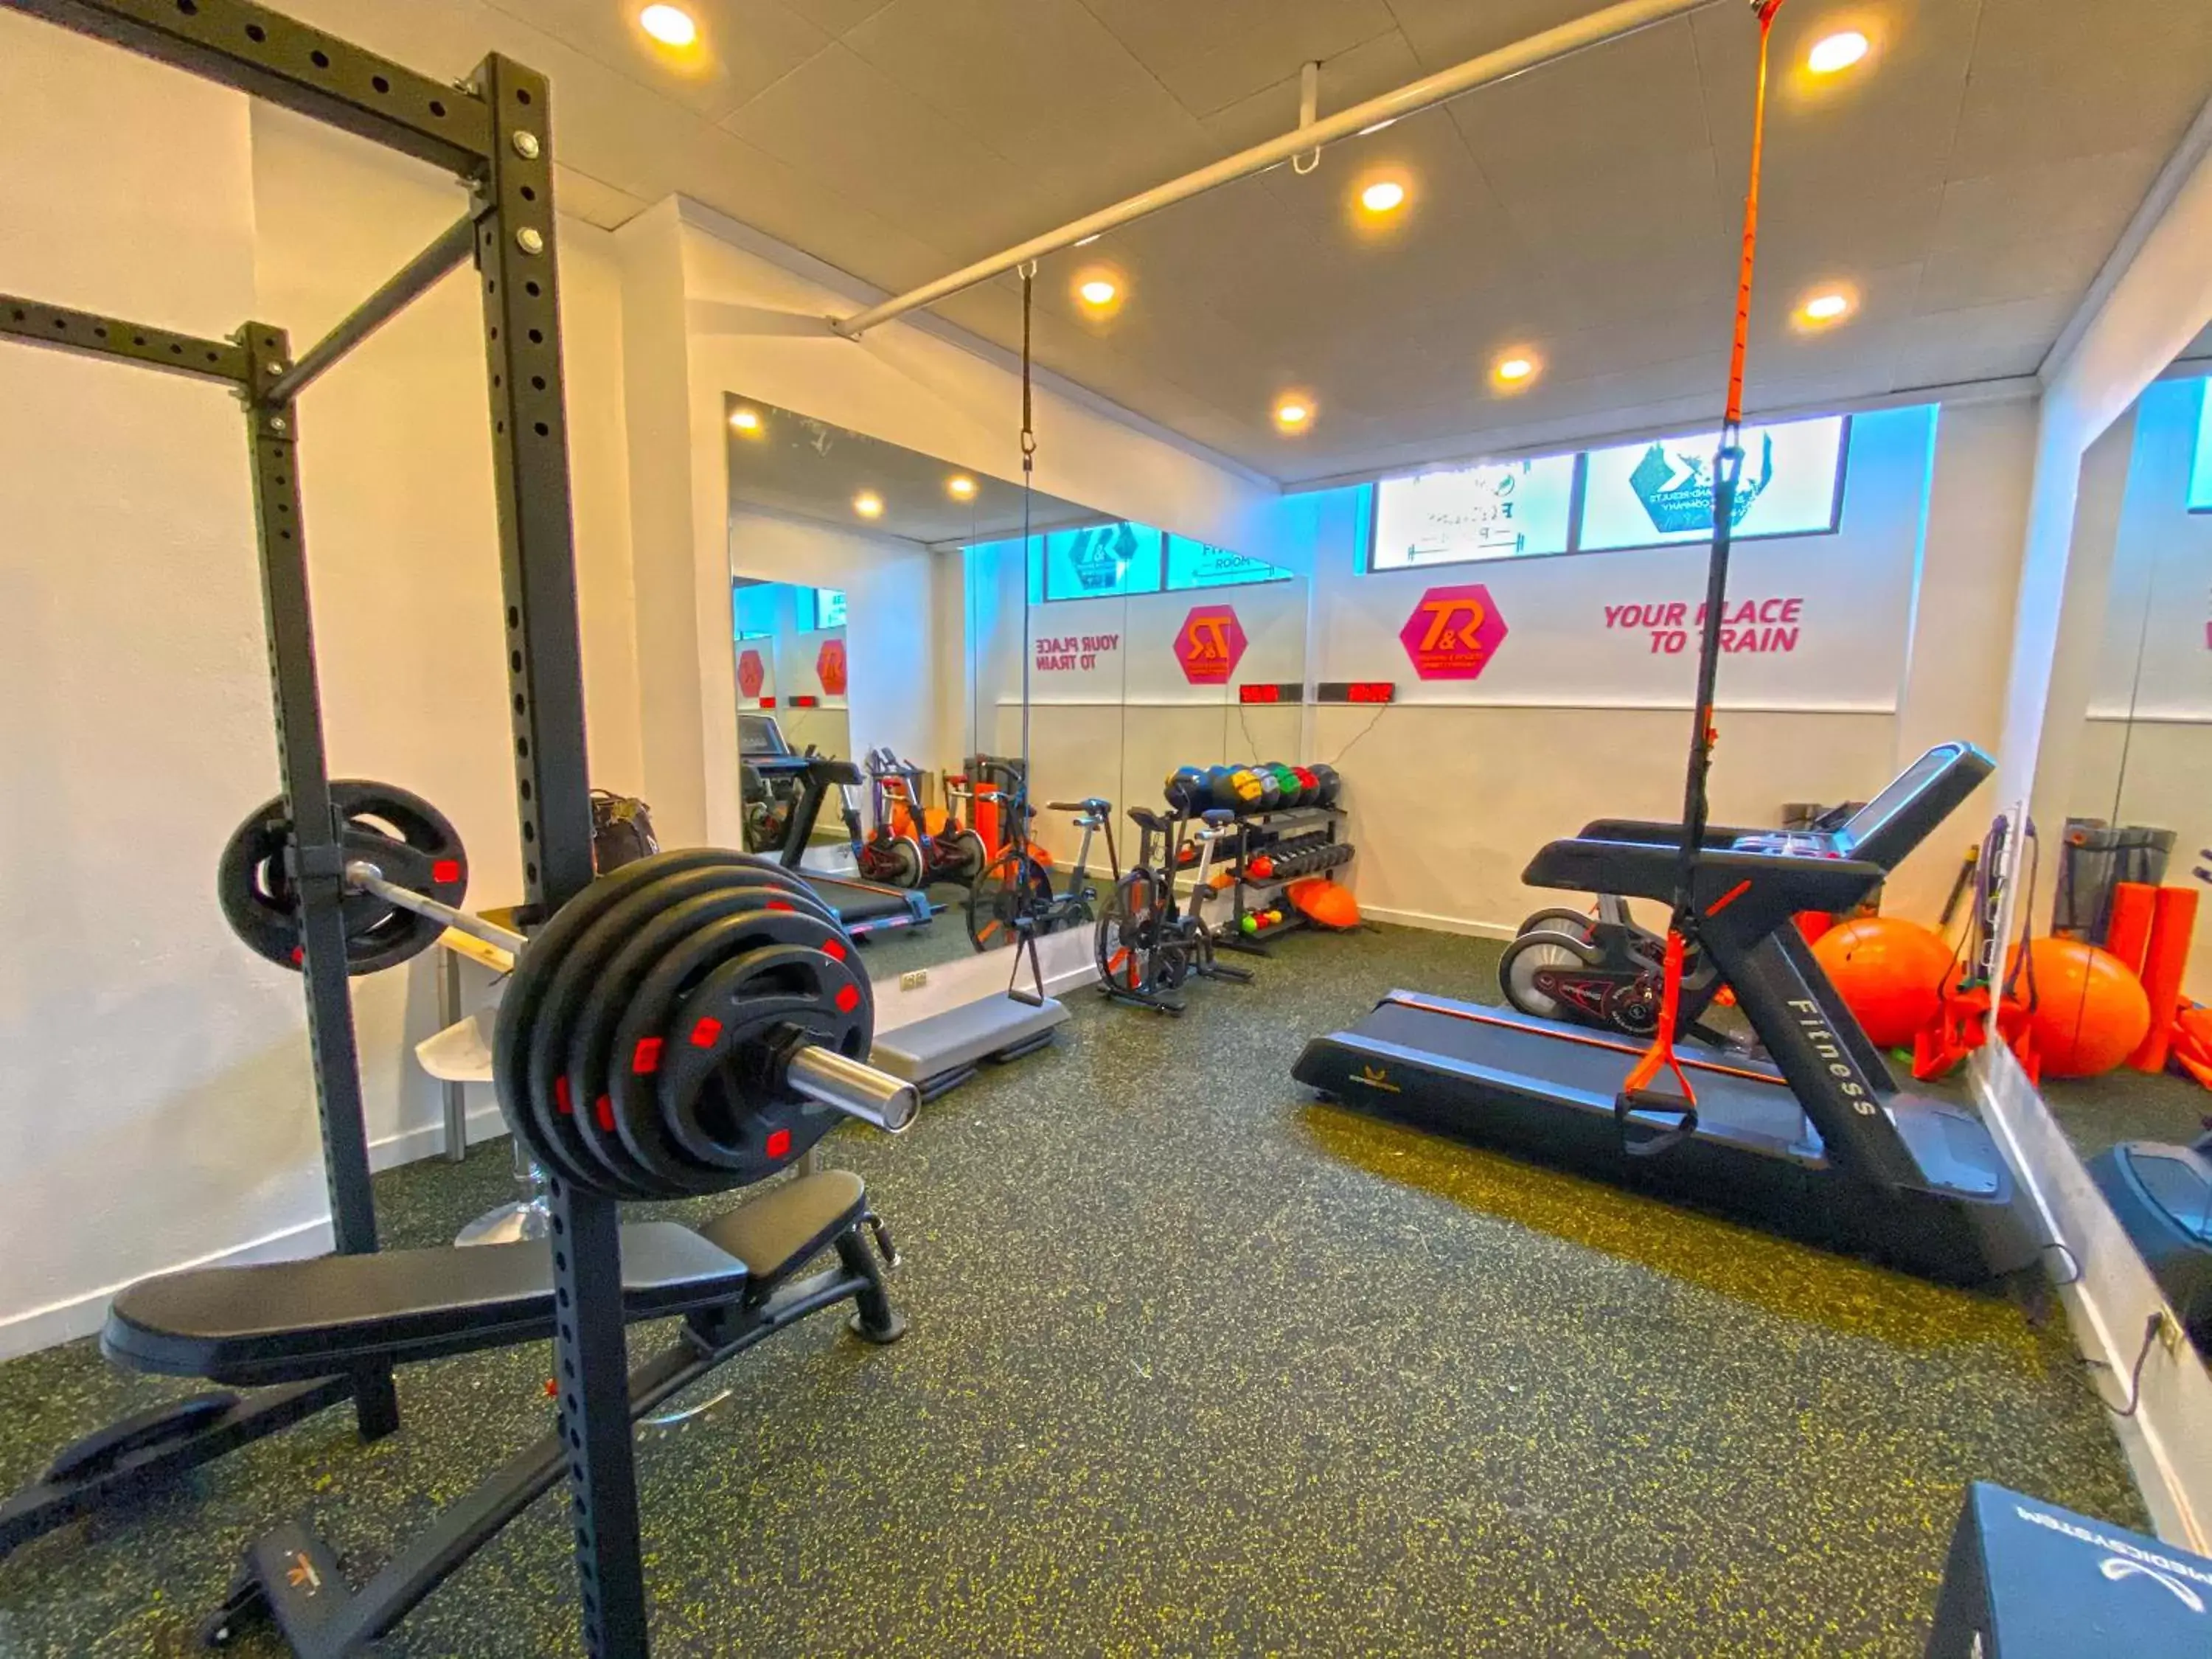 Fitness centre/facilities, Fitness Center/Facilities in Senator Marbella Spa Hotel